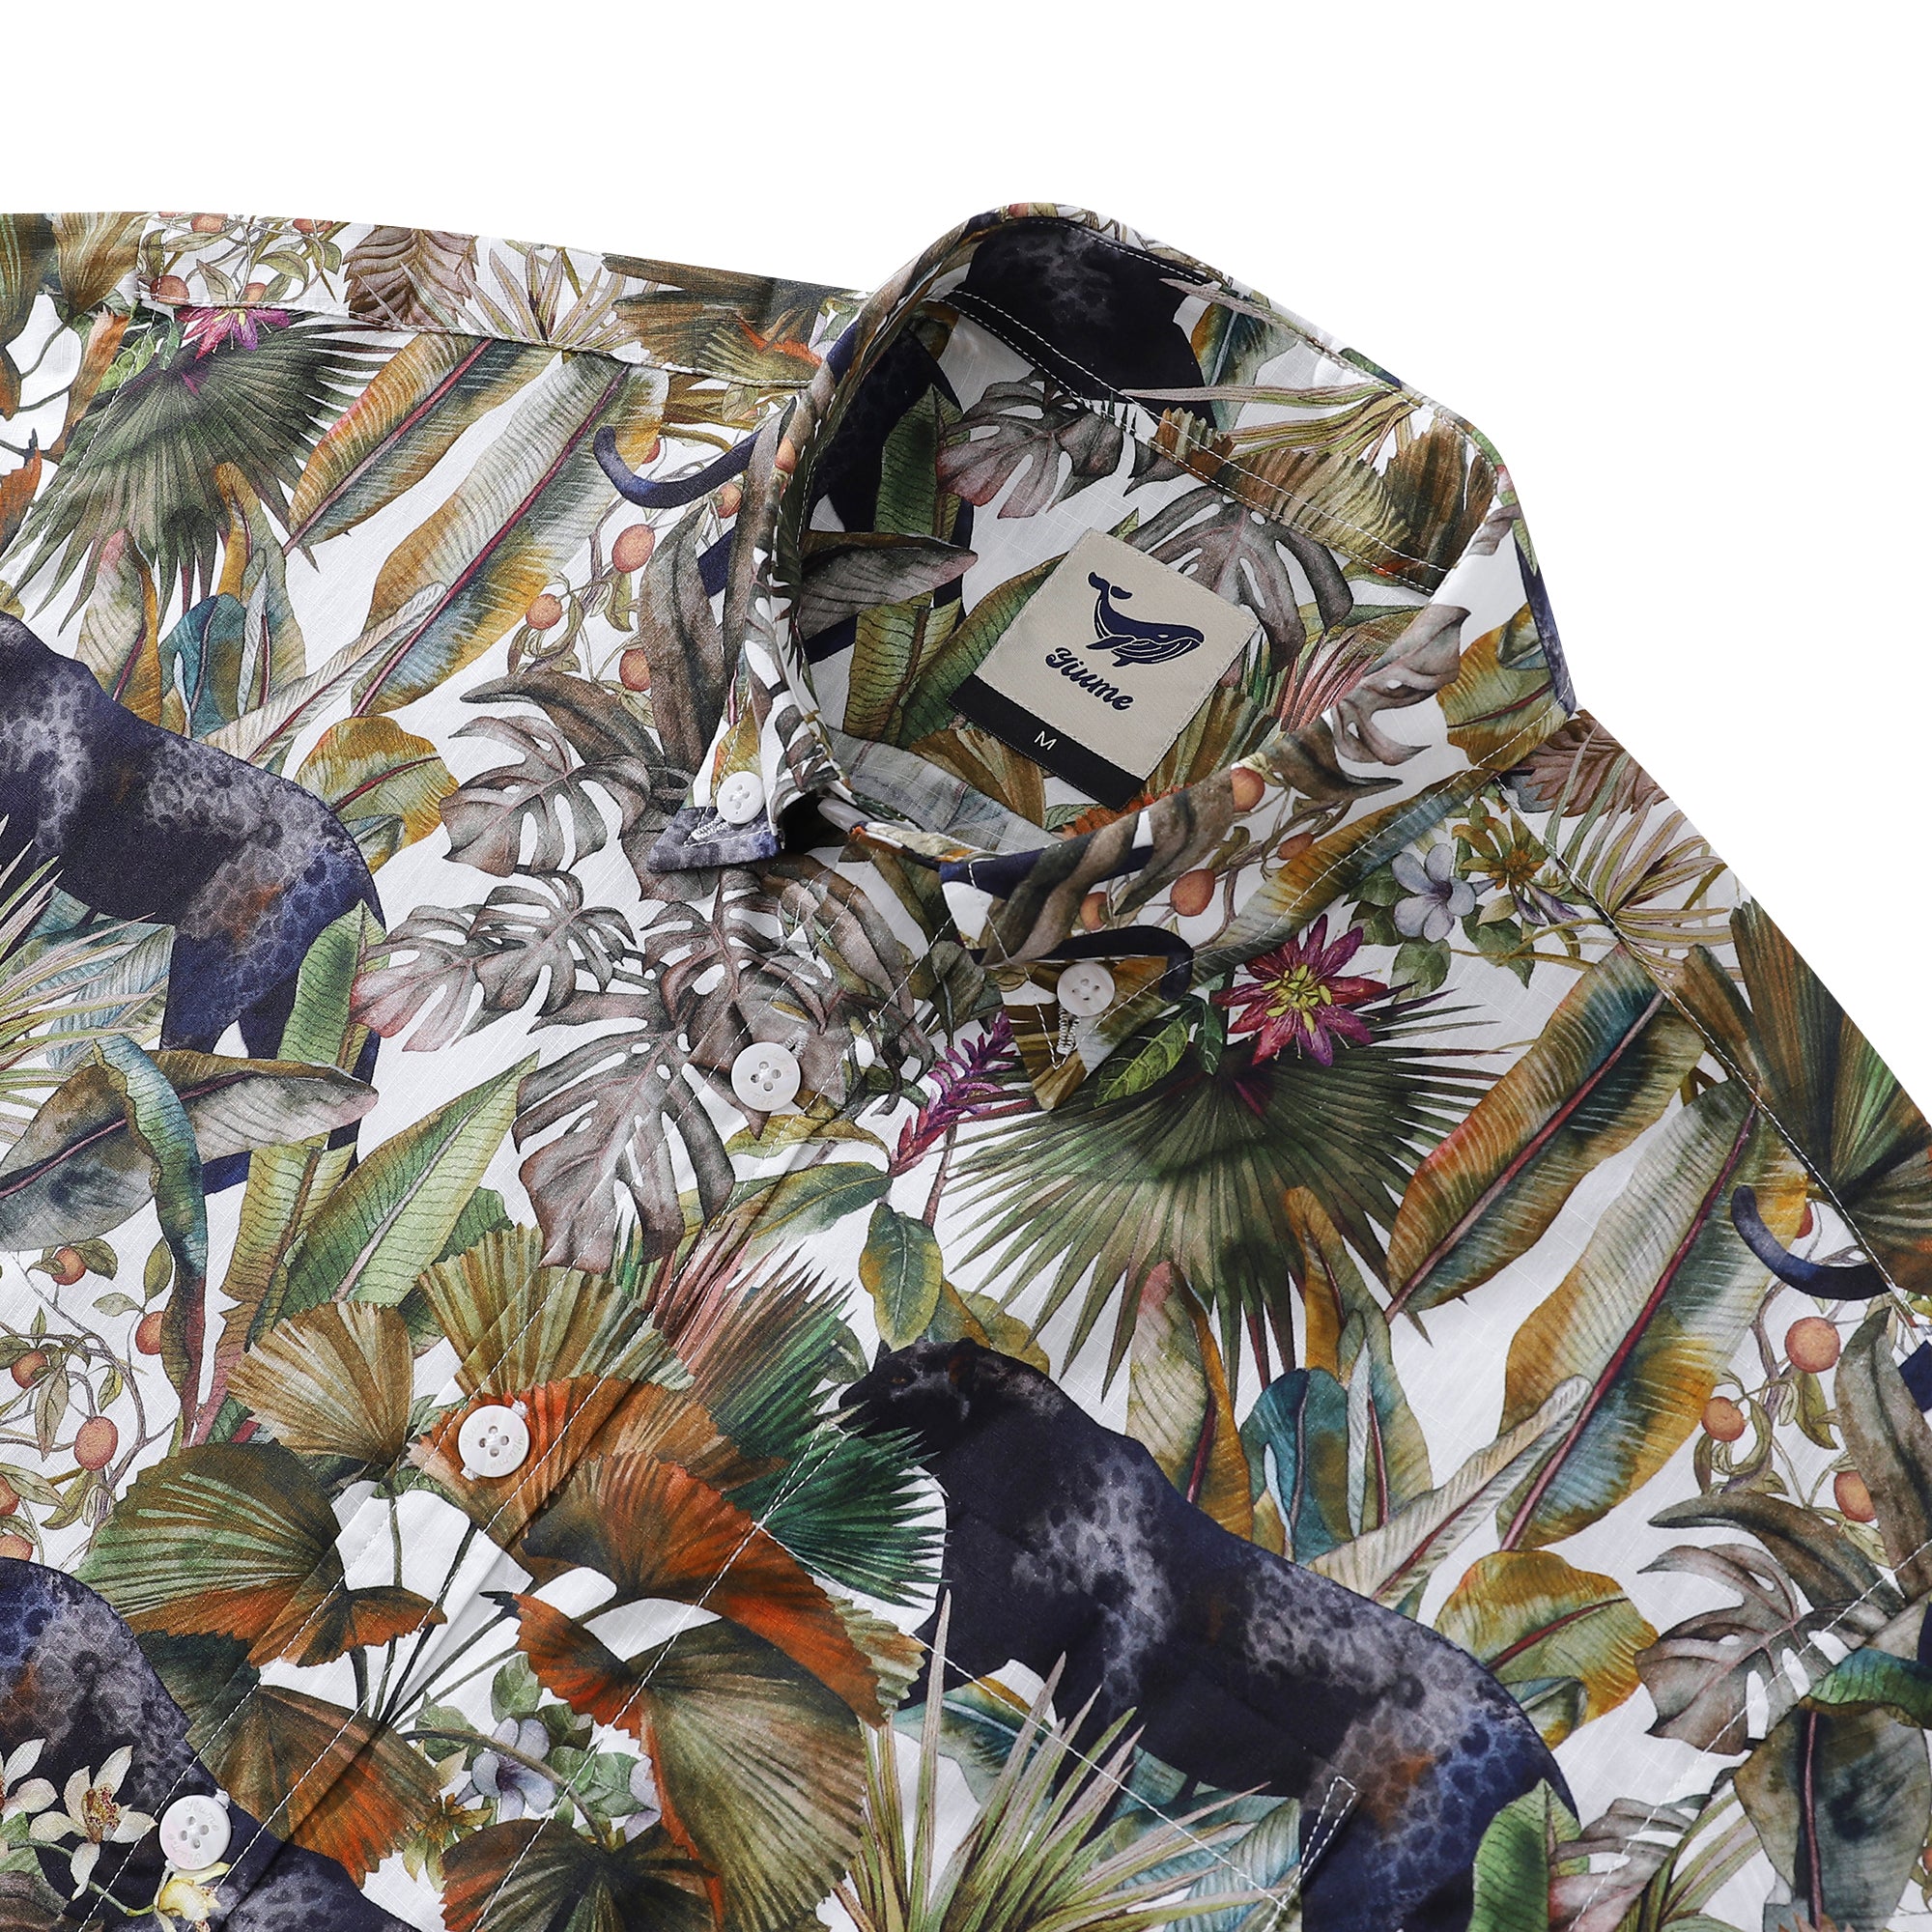 Men's Hawaiian Shirt Jungle Walk Print By Arina T Cotton Button-down Short Sleeve Aloha Shirt